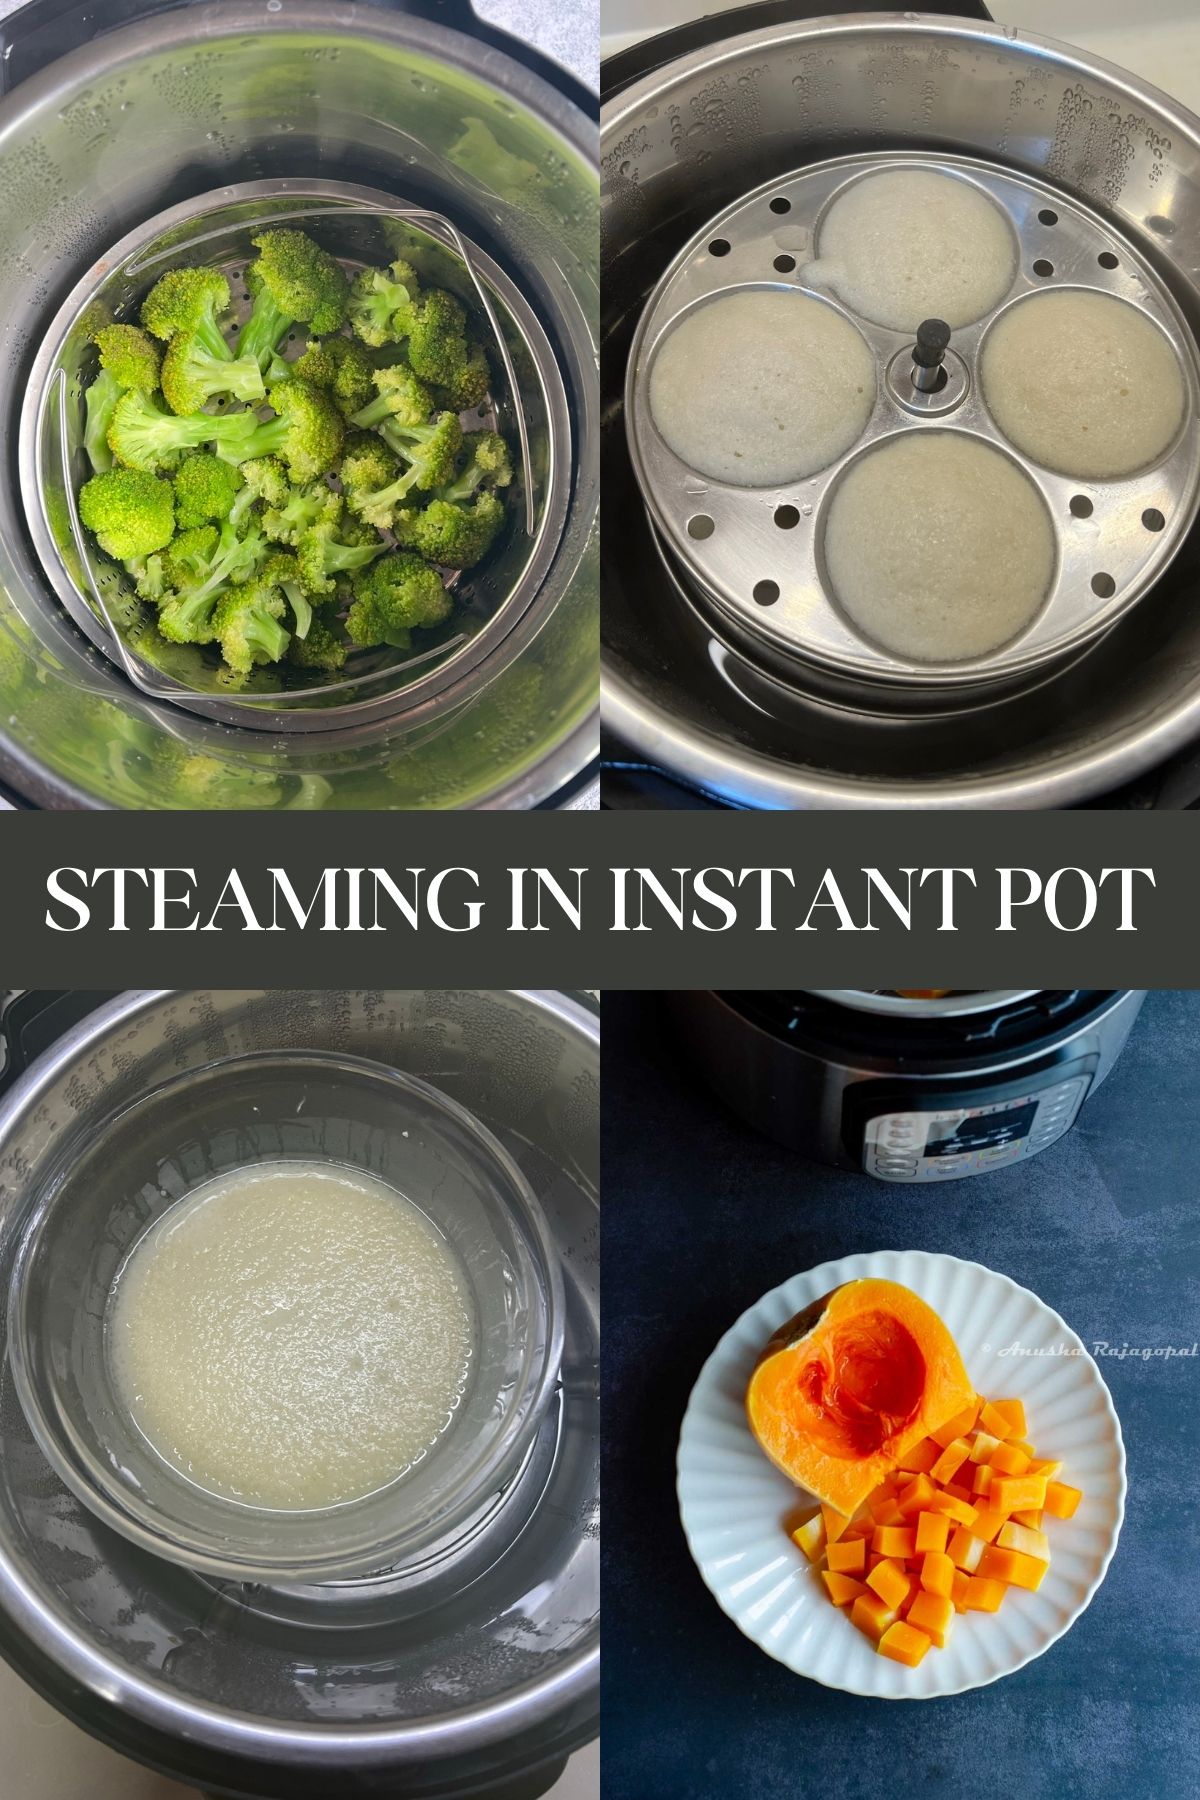 Instant Pot Setup Guide (Step-by-Step Photos & Video)